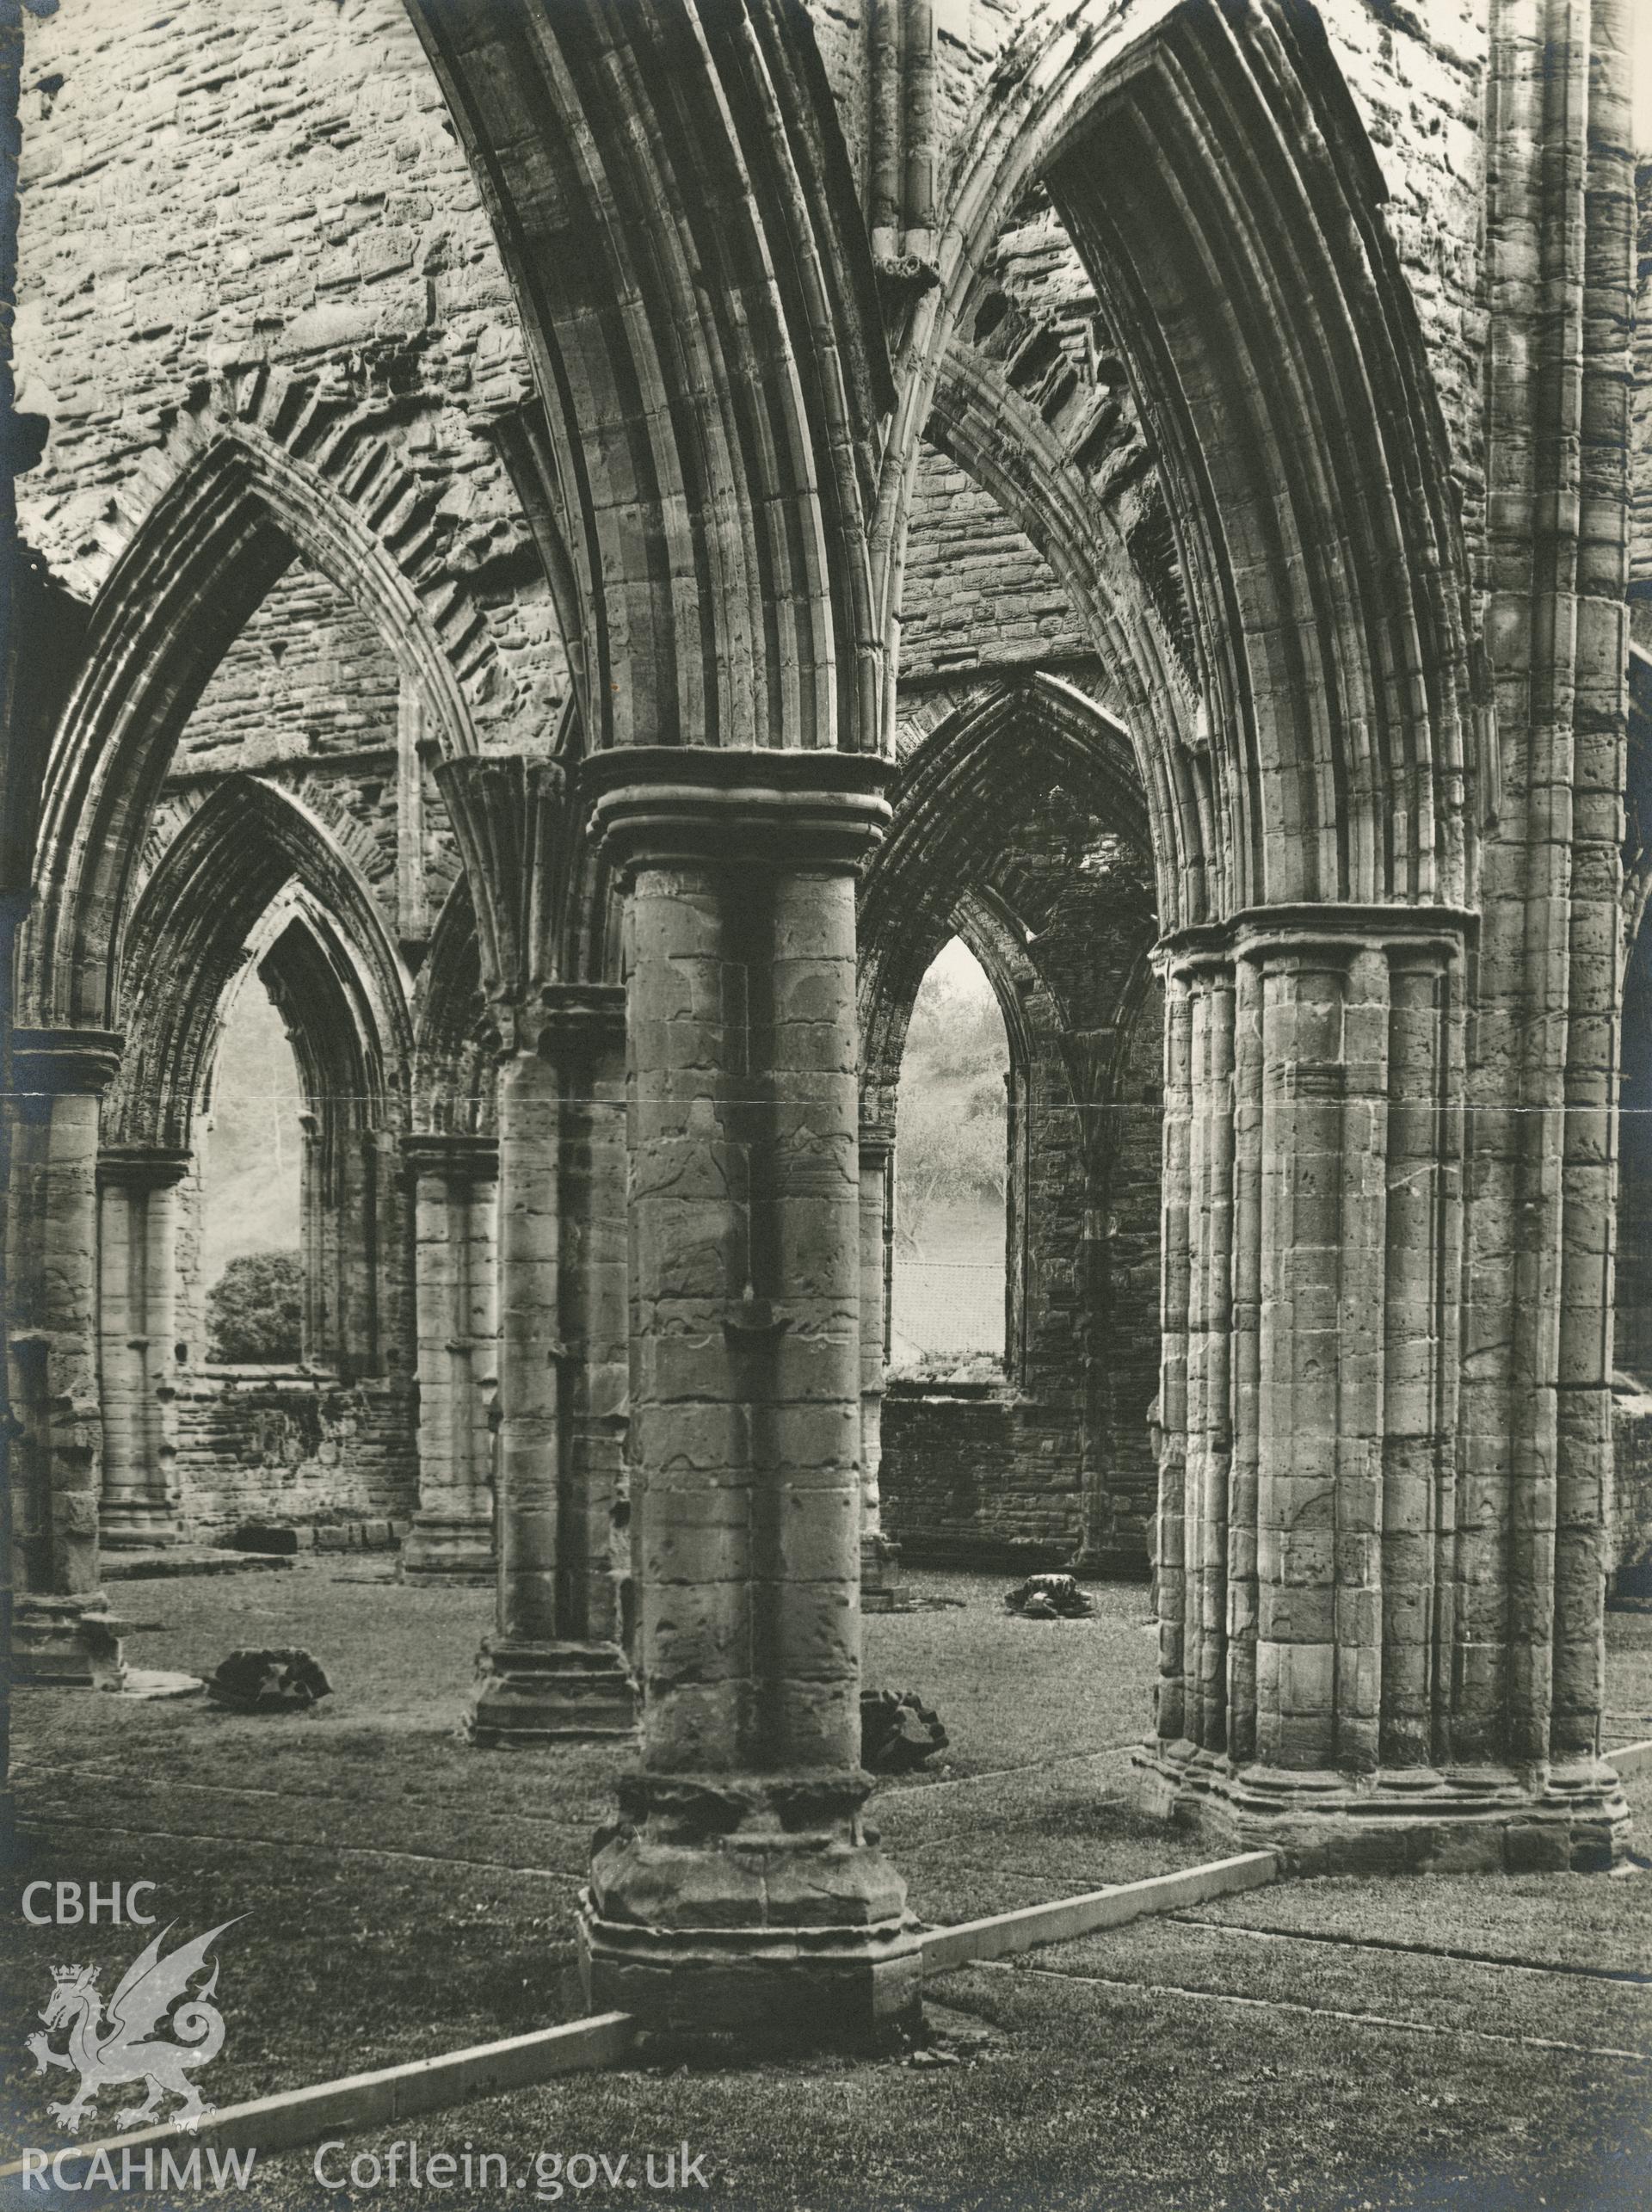 Digital copy of an interior view of Tintern Abbey by L. Harold Daniels.